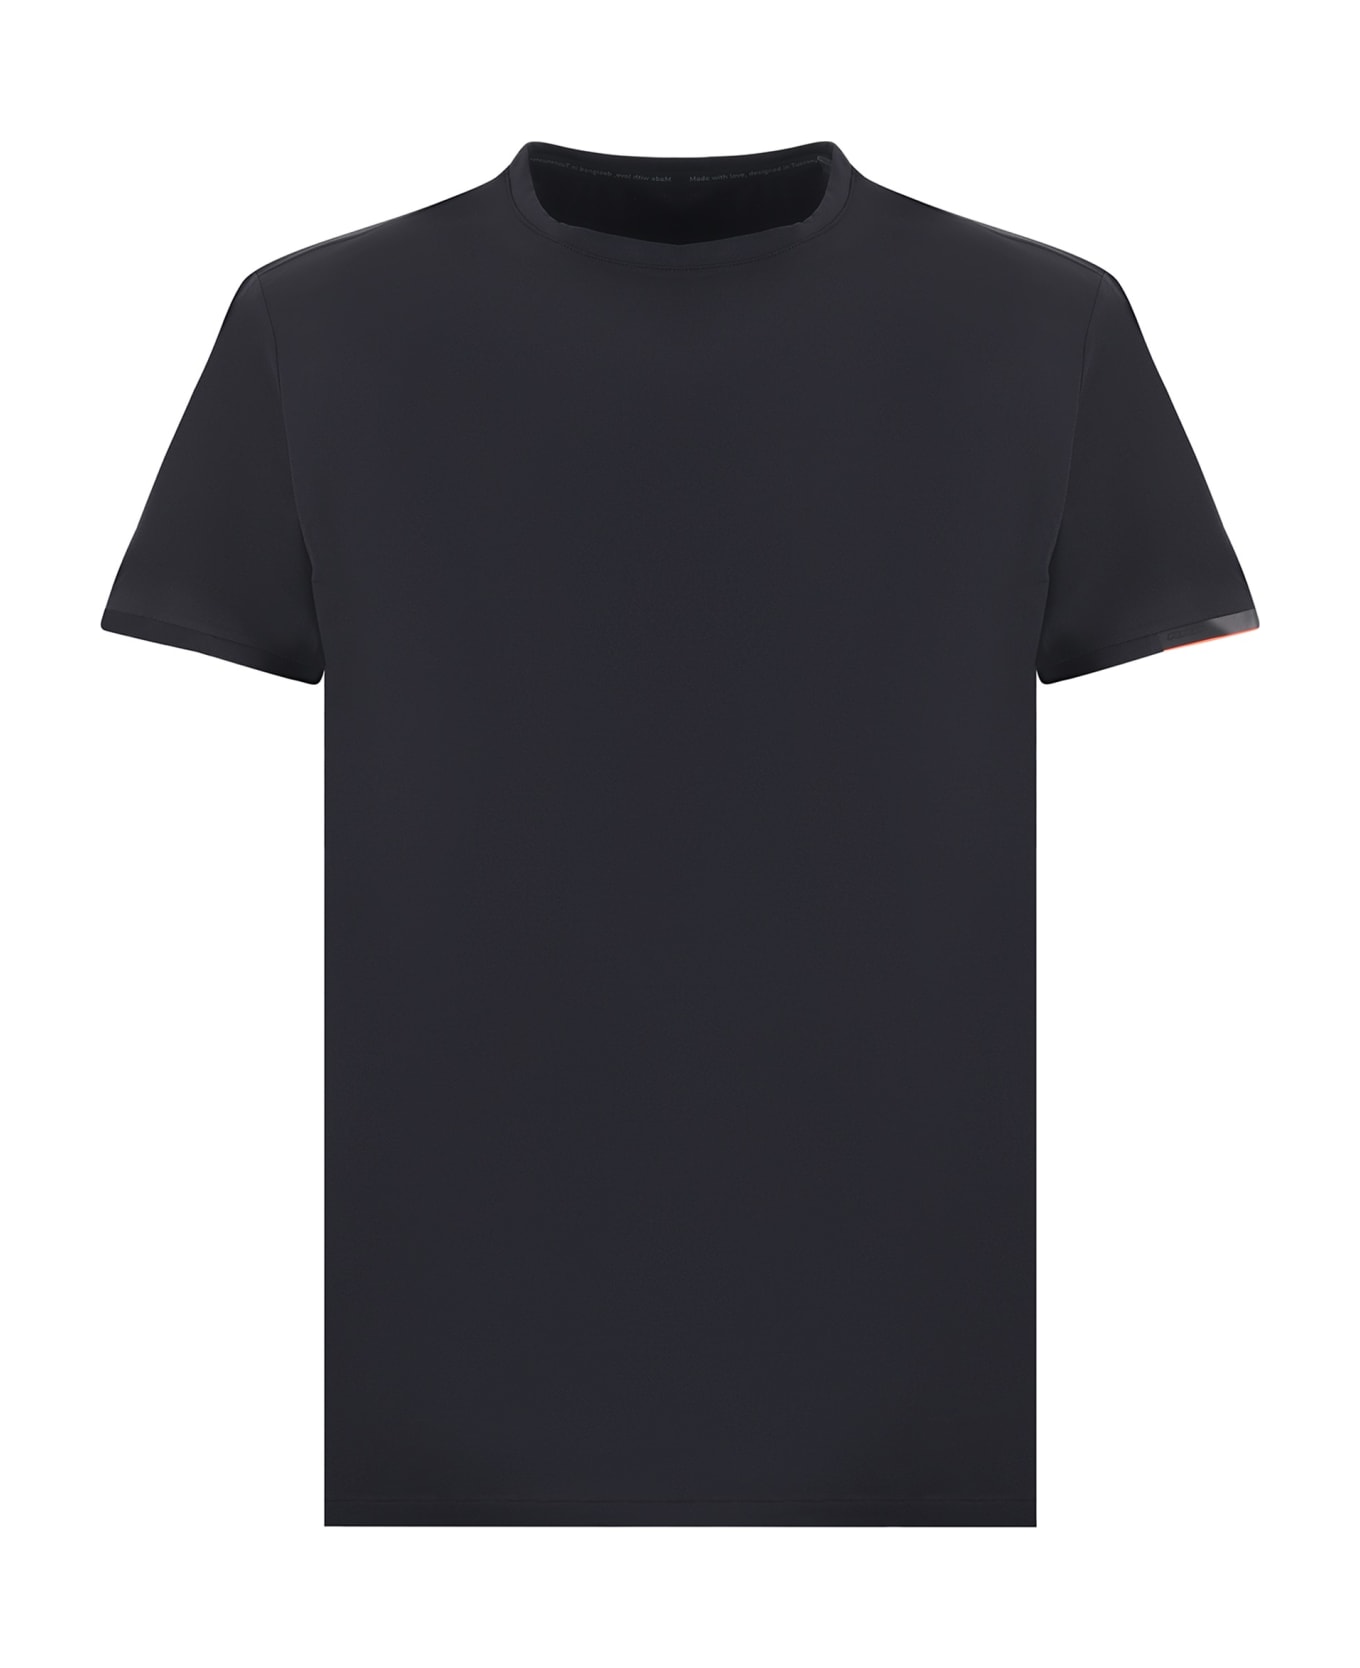 RRD - Roberto Ricci Design Rrd T-shirt - Nero